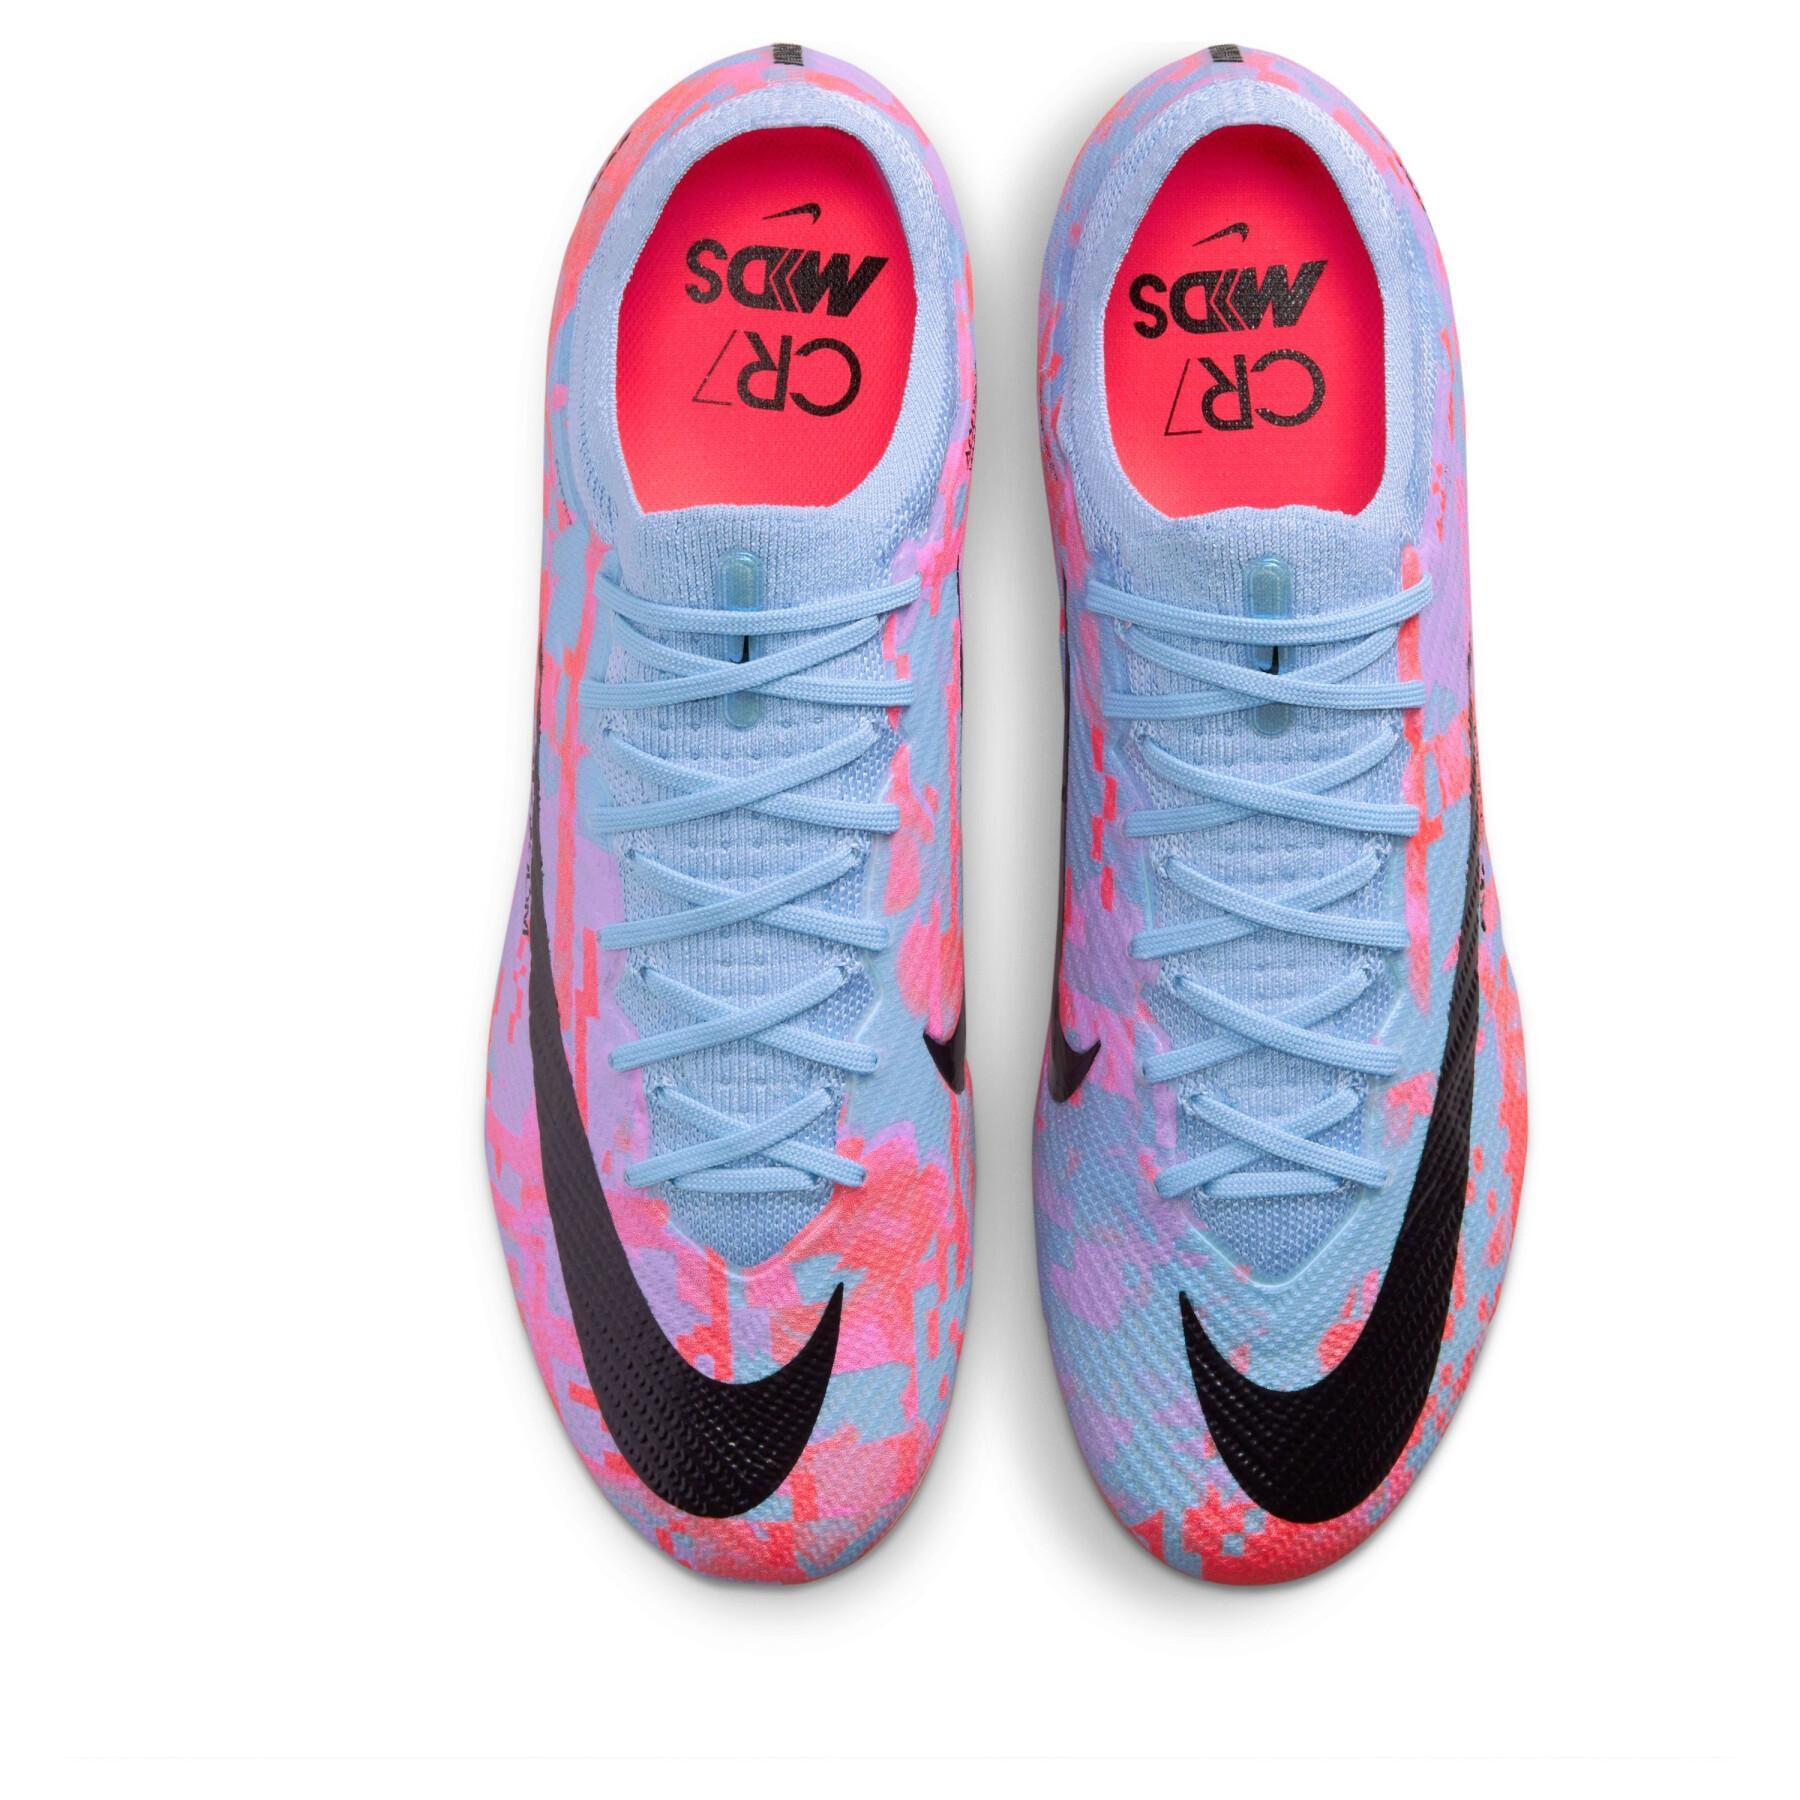 Chaussures de football Nike Mercurial Vapor 15 Elite AG/PRO - MDS pack